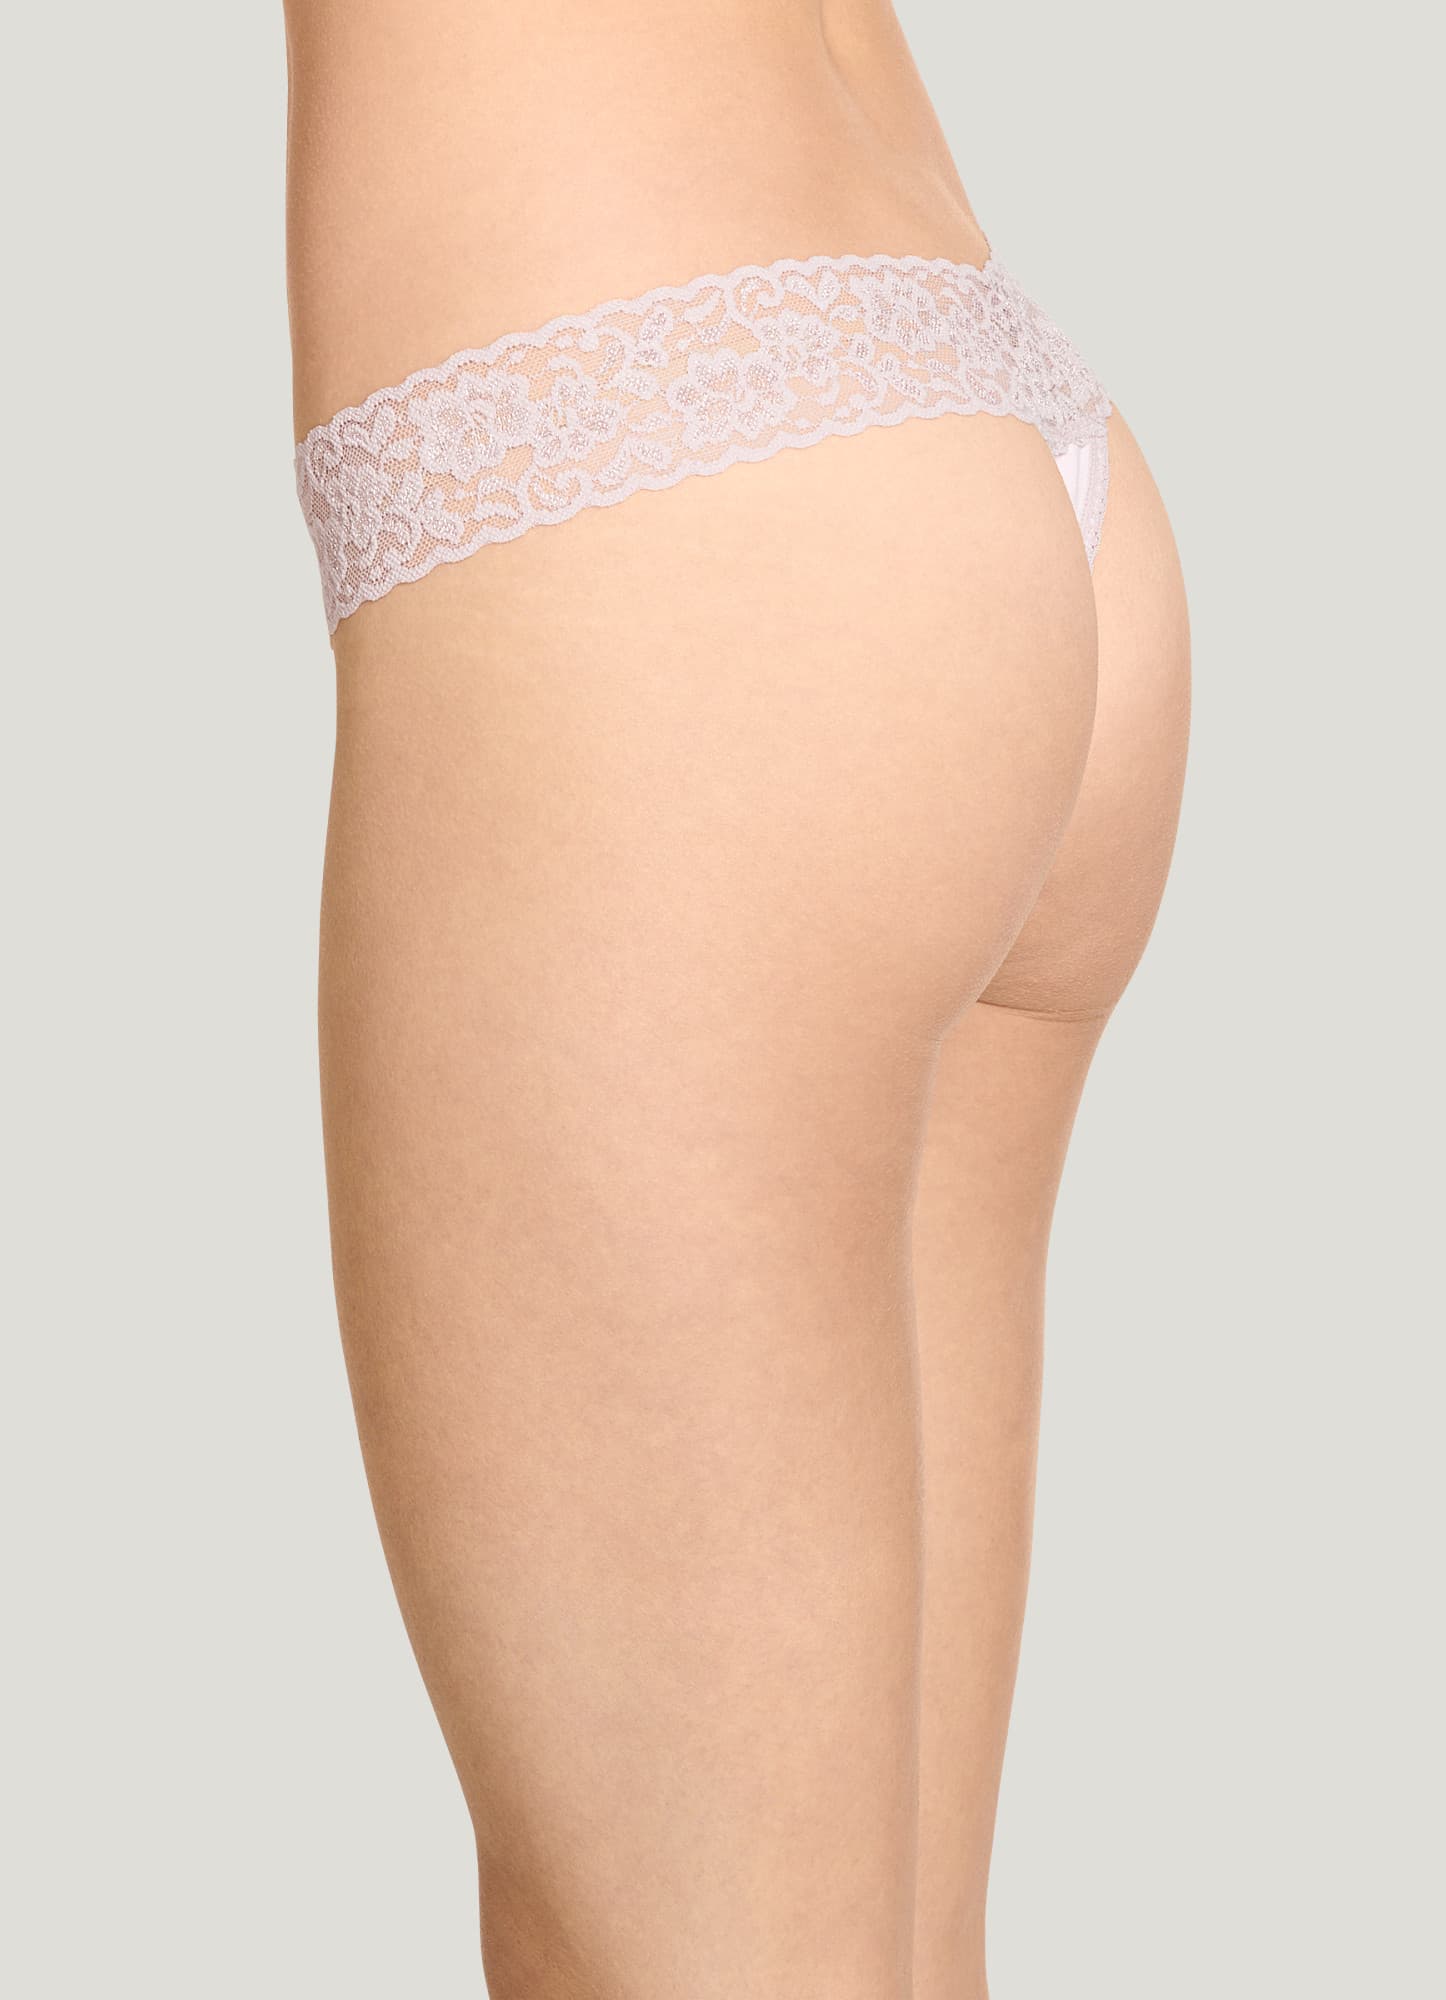 CuteByte Cotton Thongs for Women Sexy Lace Thong Underwear T